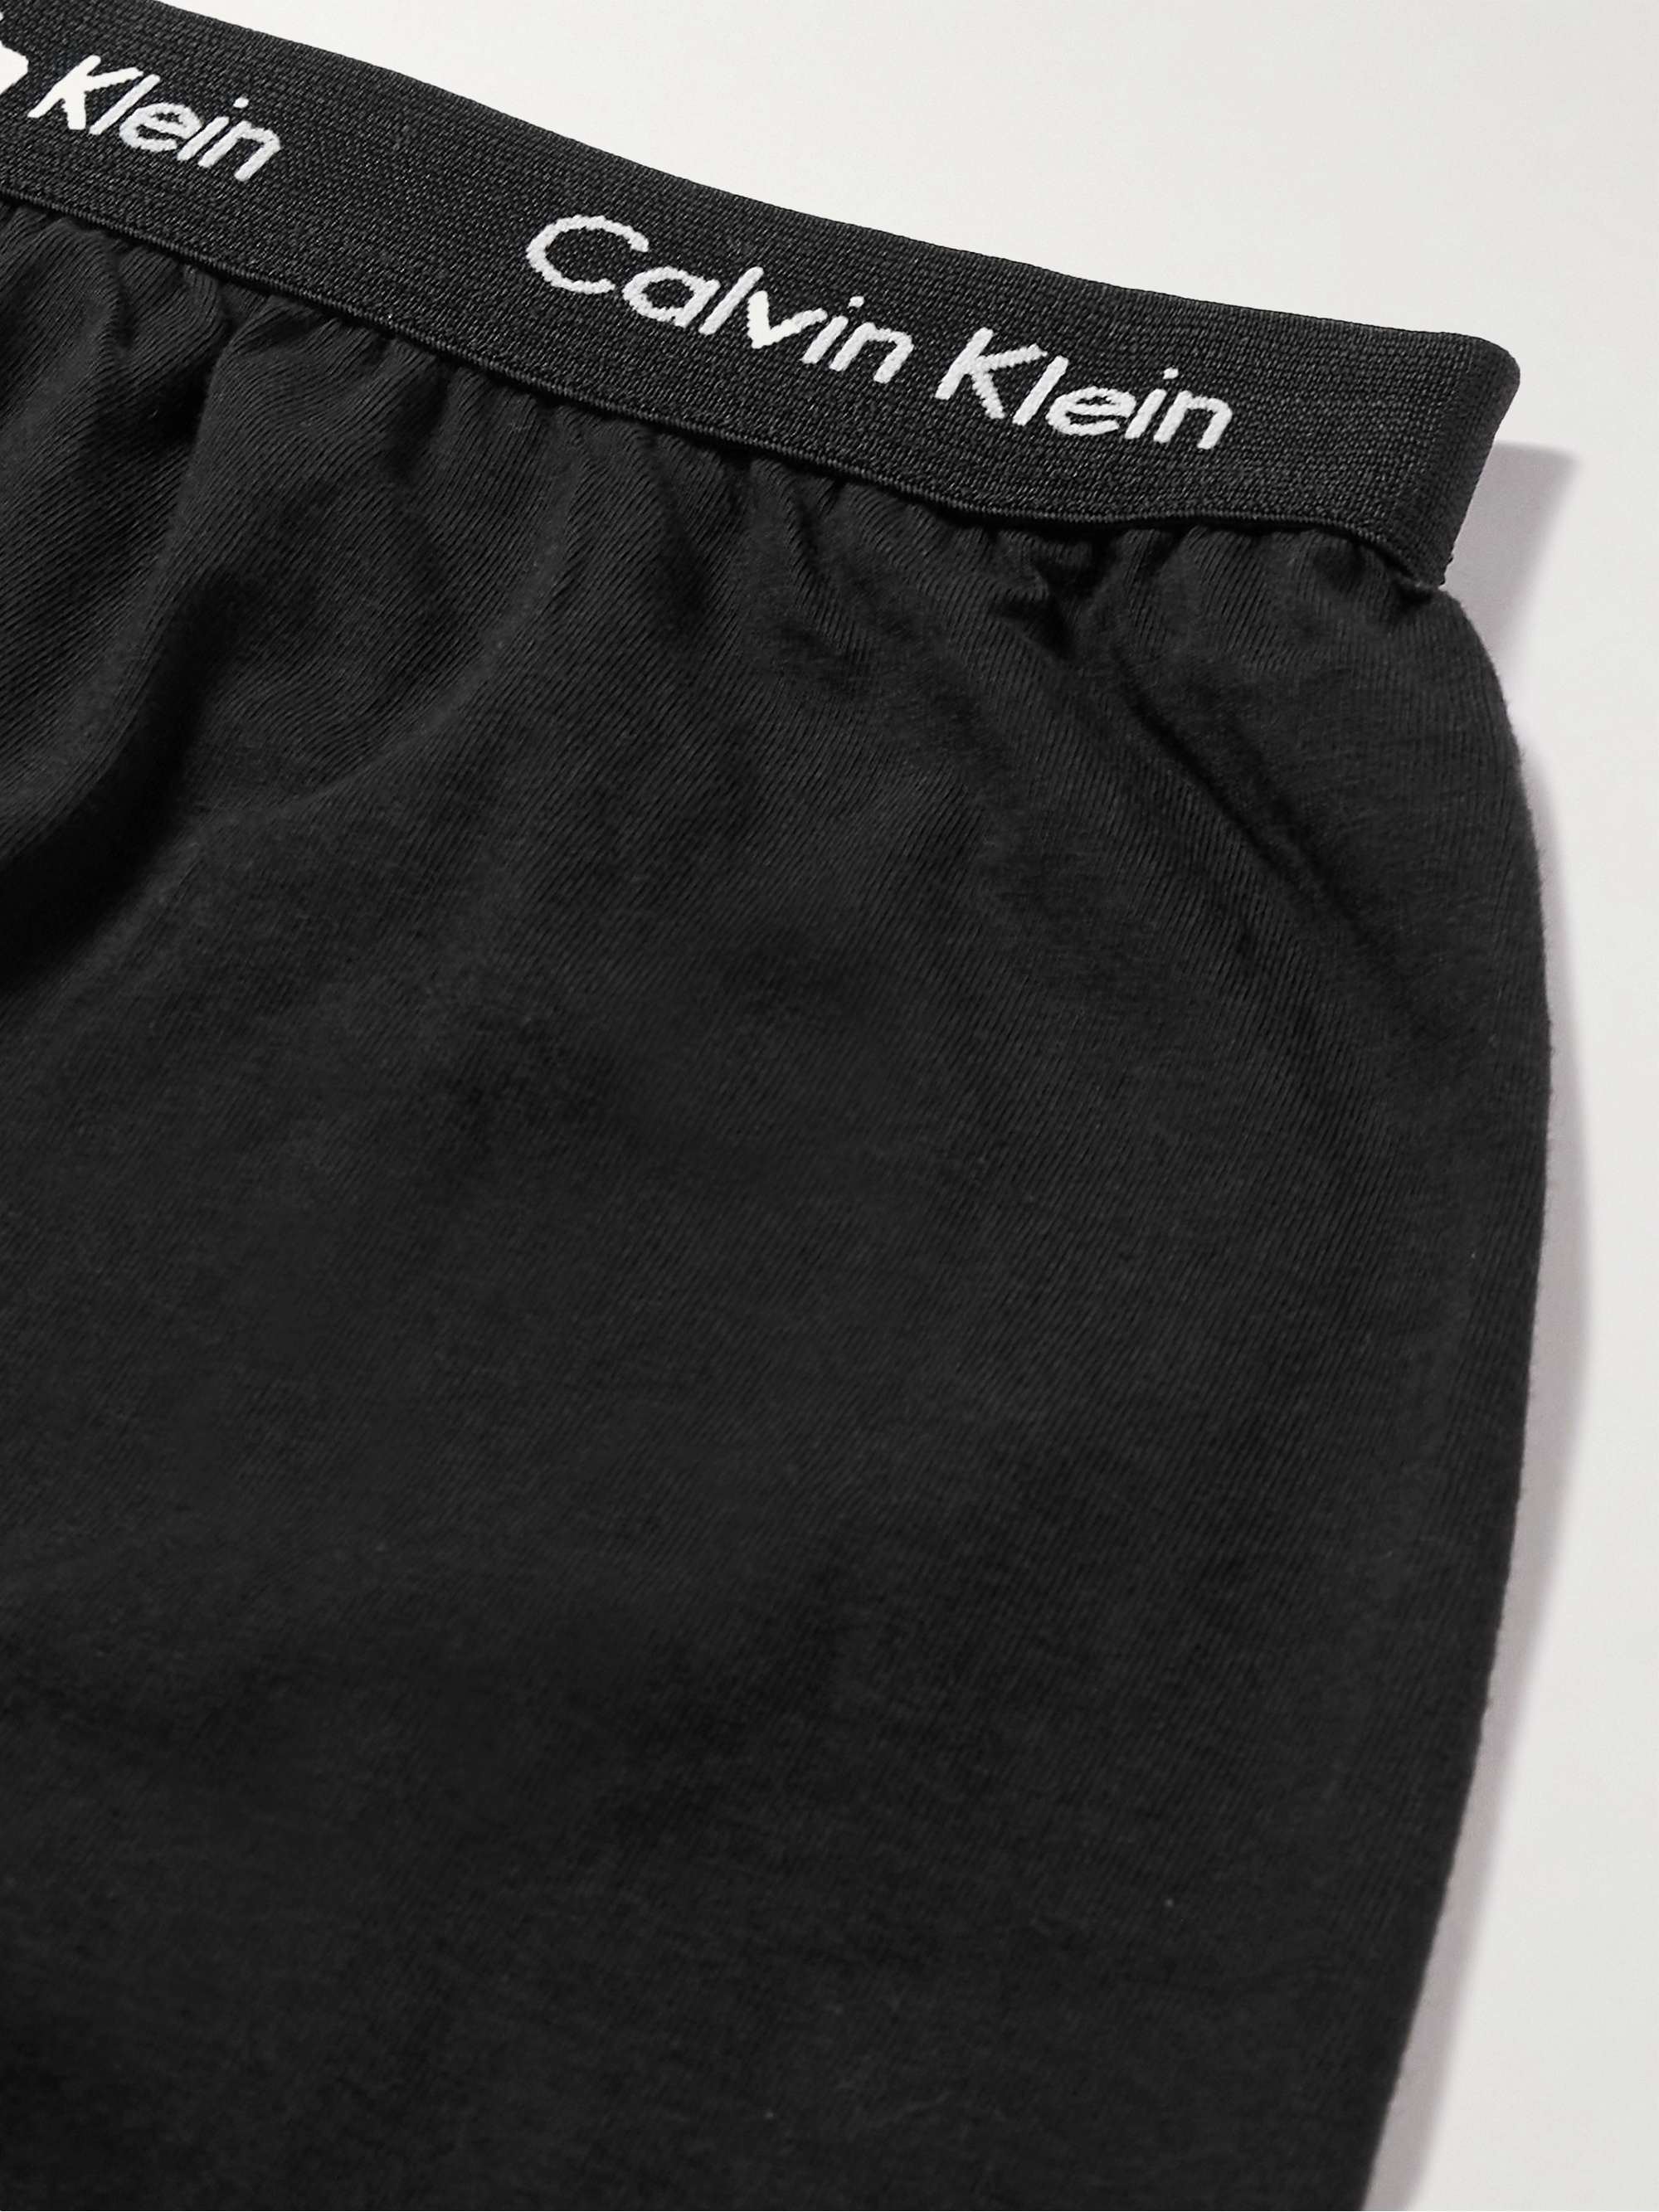 CALVIN KLEIN UNDERWEAR Two-Pack Stretch-Cotton Boxer Shorts for Men | MR  PORTER